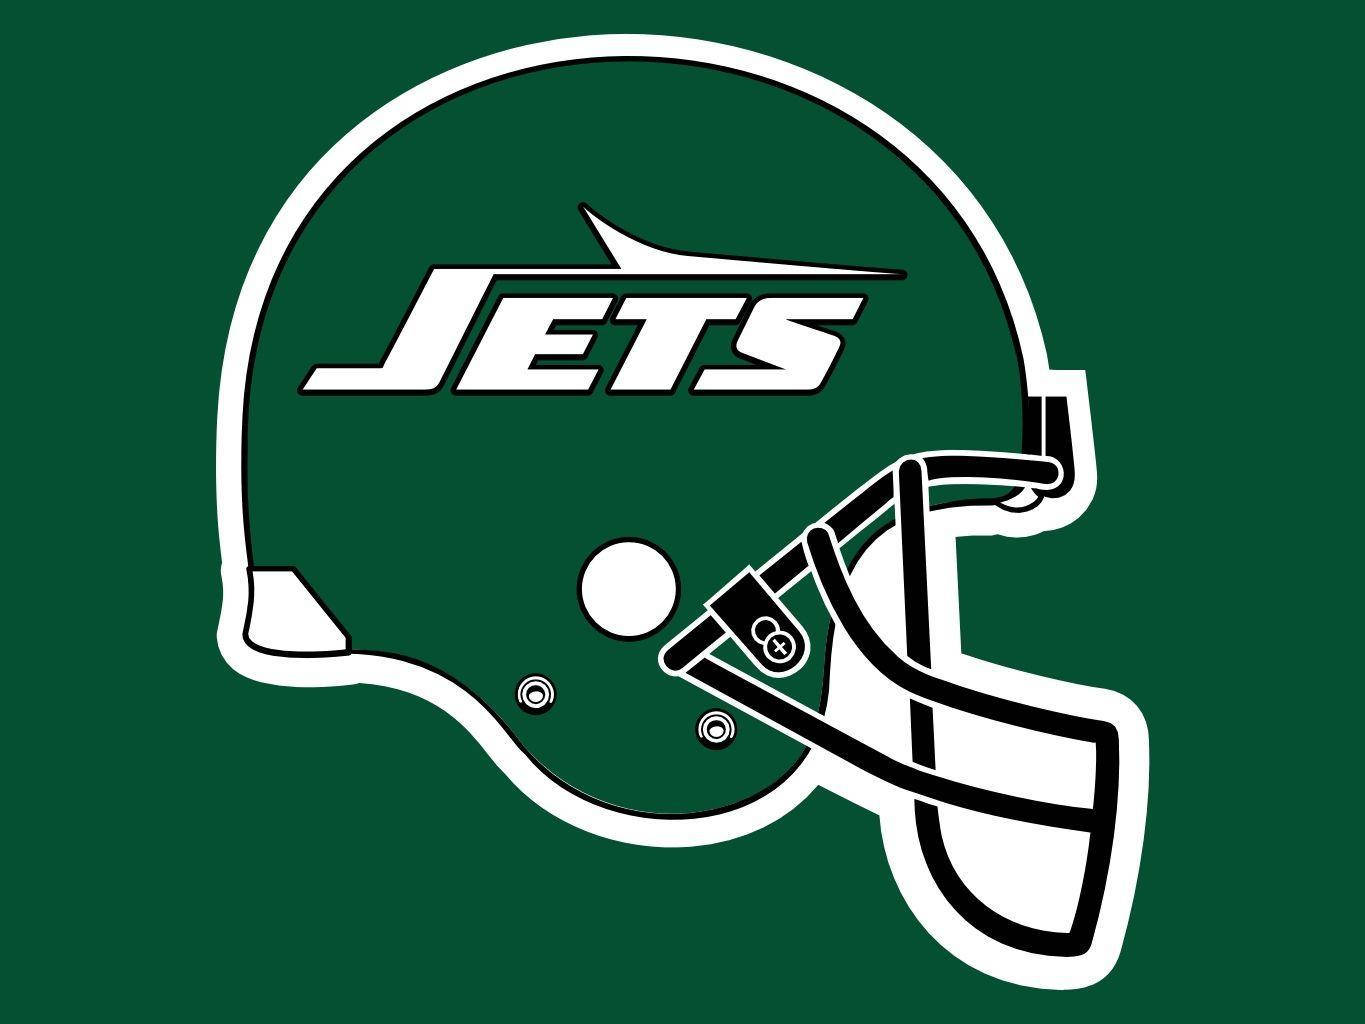 jets helmet green